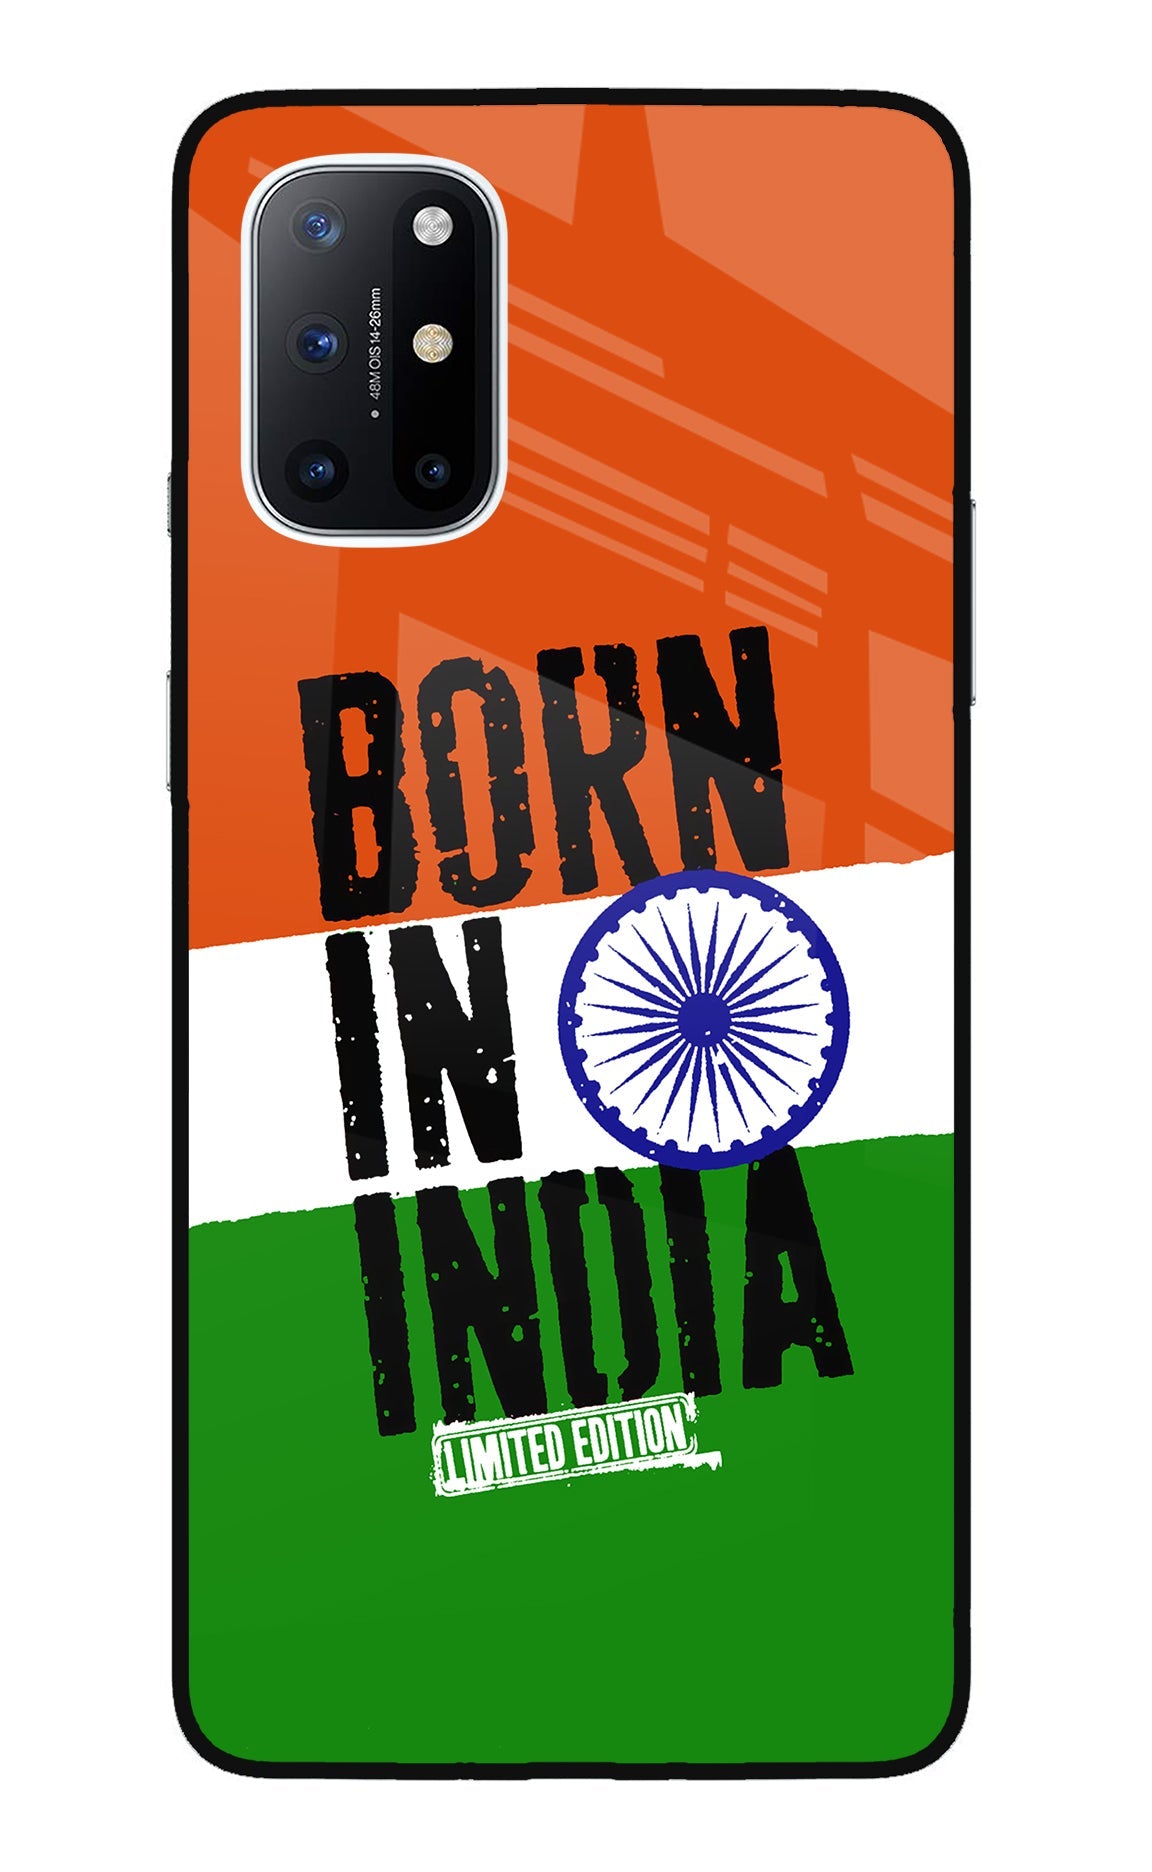 Born in India Oneplus 8T Glass Case